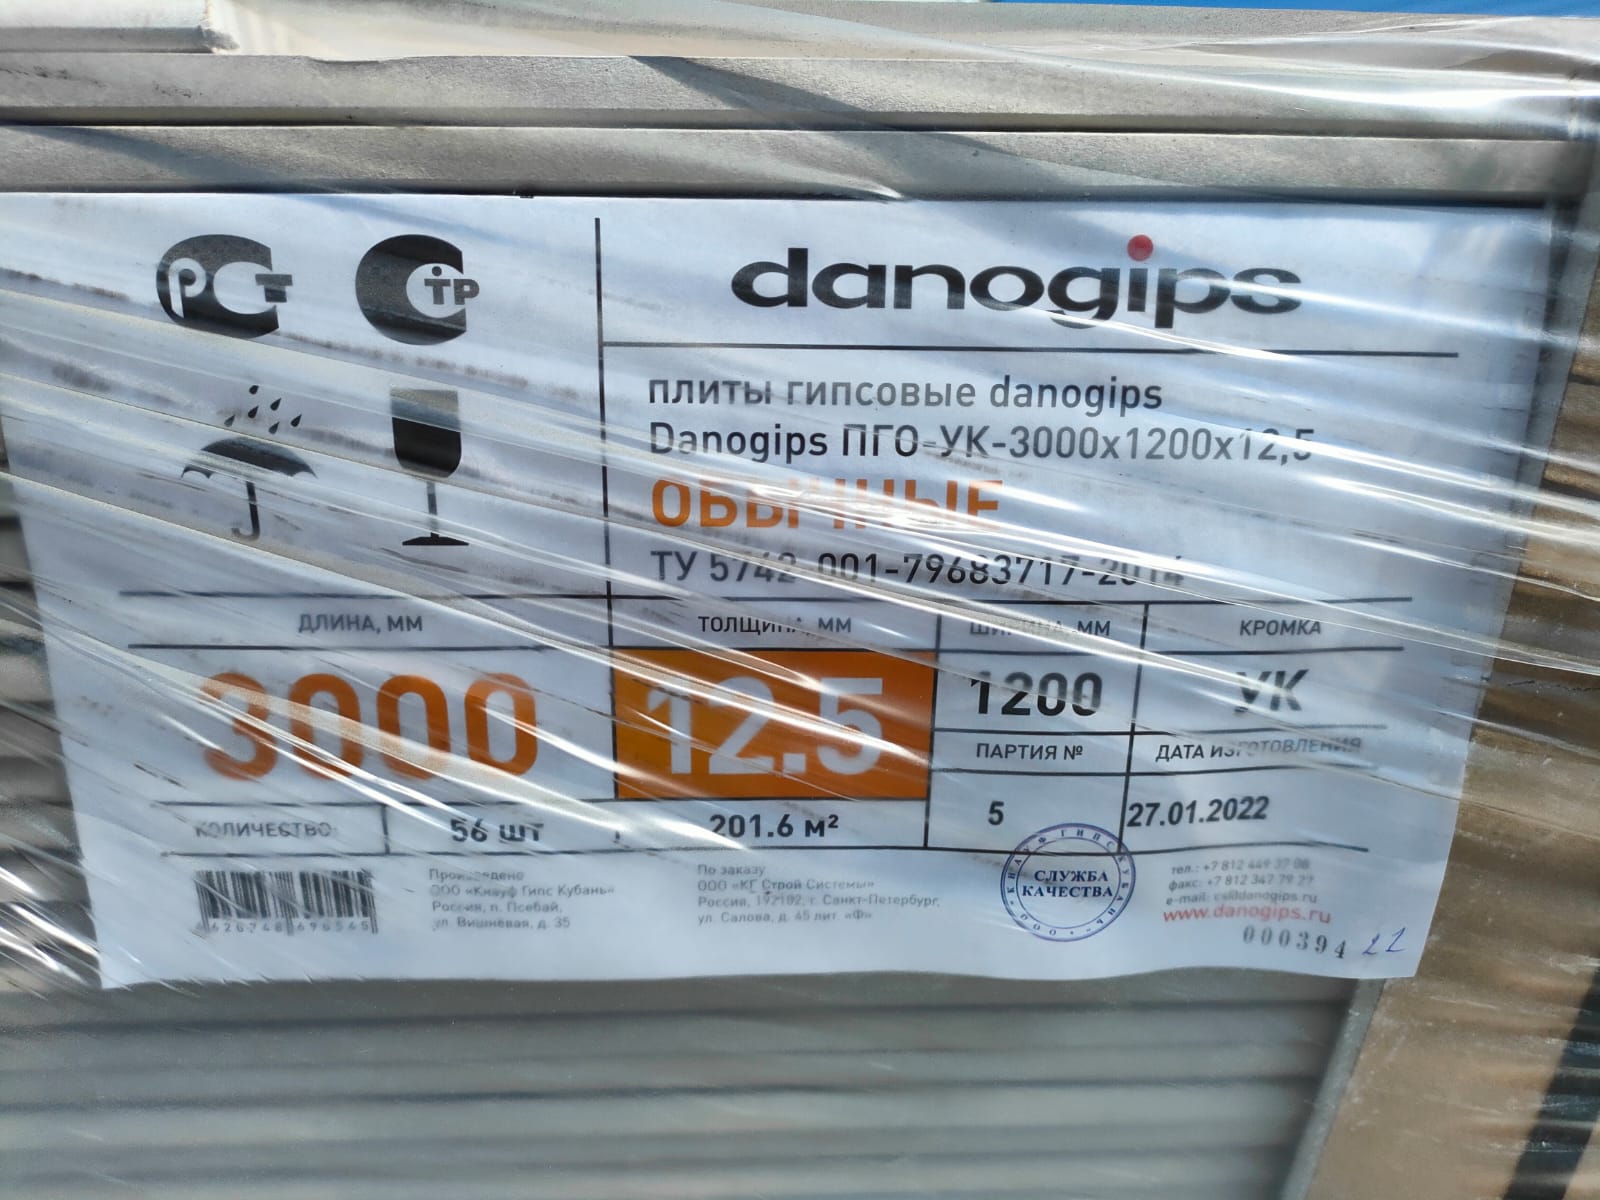 Гипсокартон (ГКЛ) danogips / Даногипс ПГО-УК 3000 х 1200 х 12,5 мм